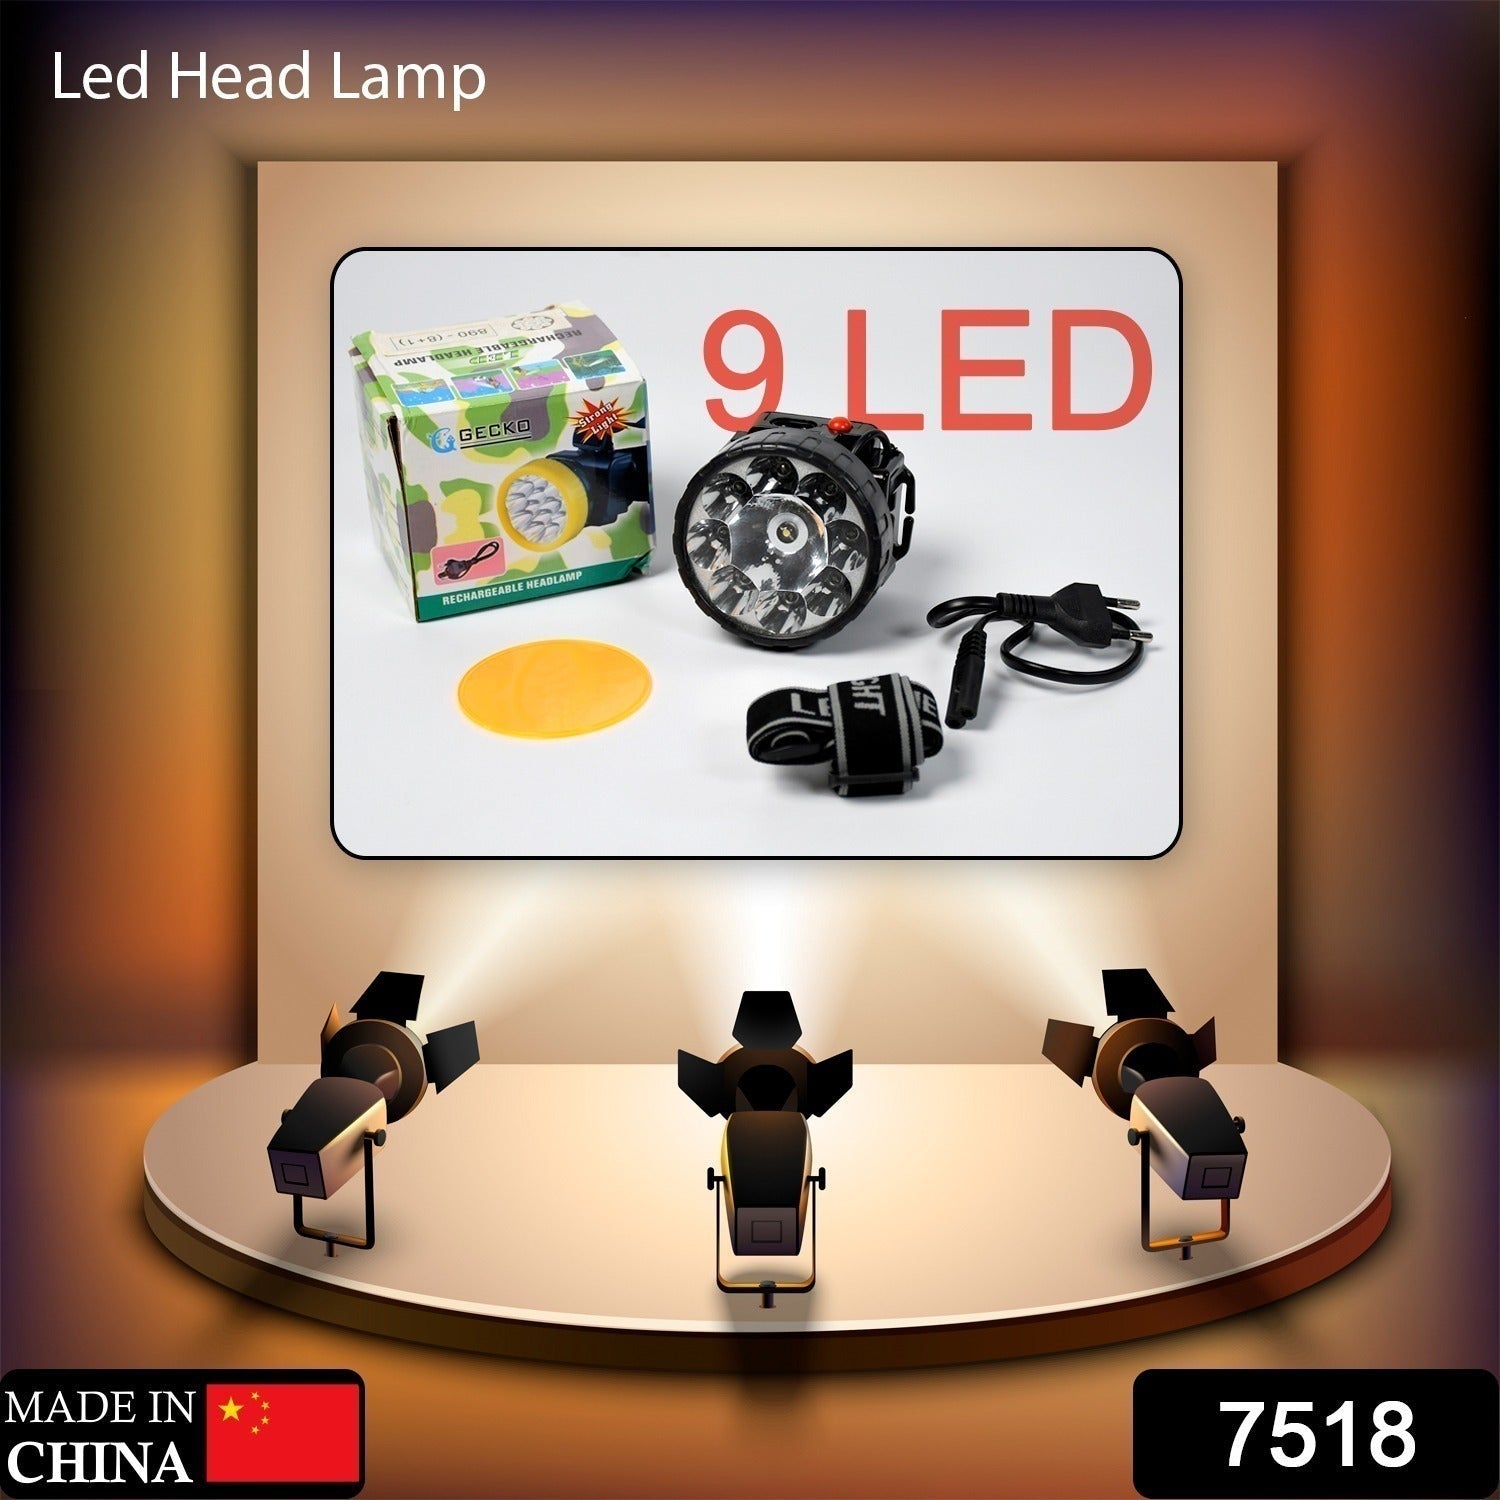 7518 HEAD LAMP 9 LED LONG RANGE RECHARGEABLE HEADLAMP ADJUSTMENT LAMP USE FOR FARMERS, FISHING, CAMPING, HIKING, TREKKING, CYCLING DeoDap